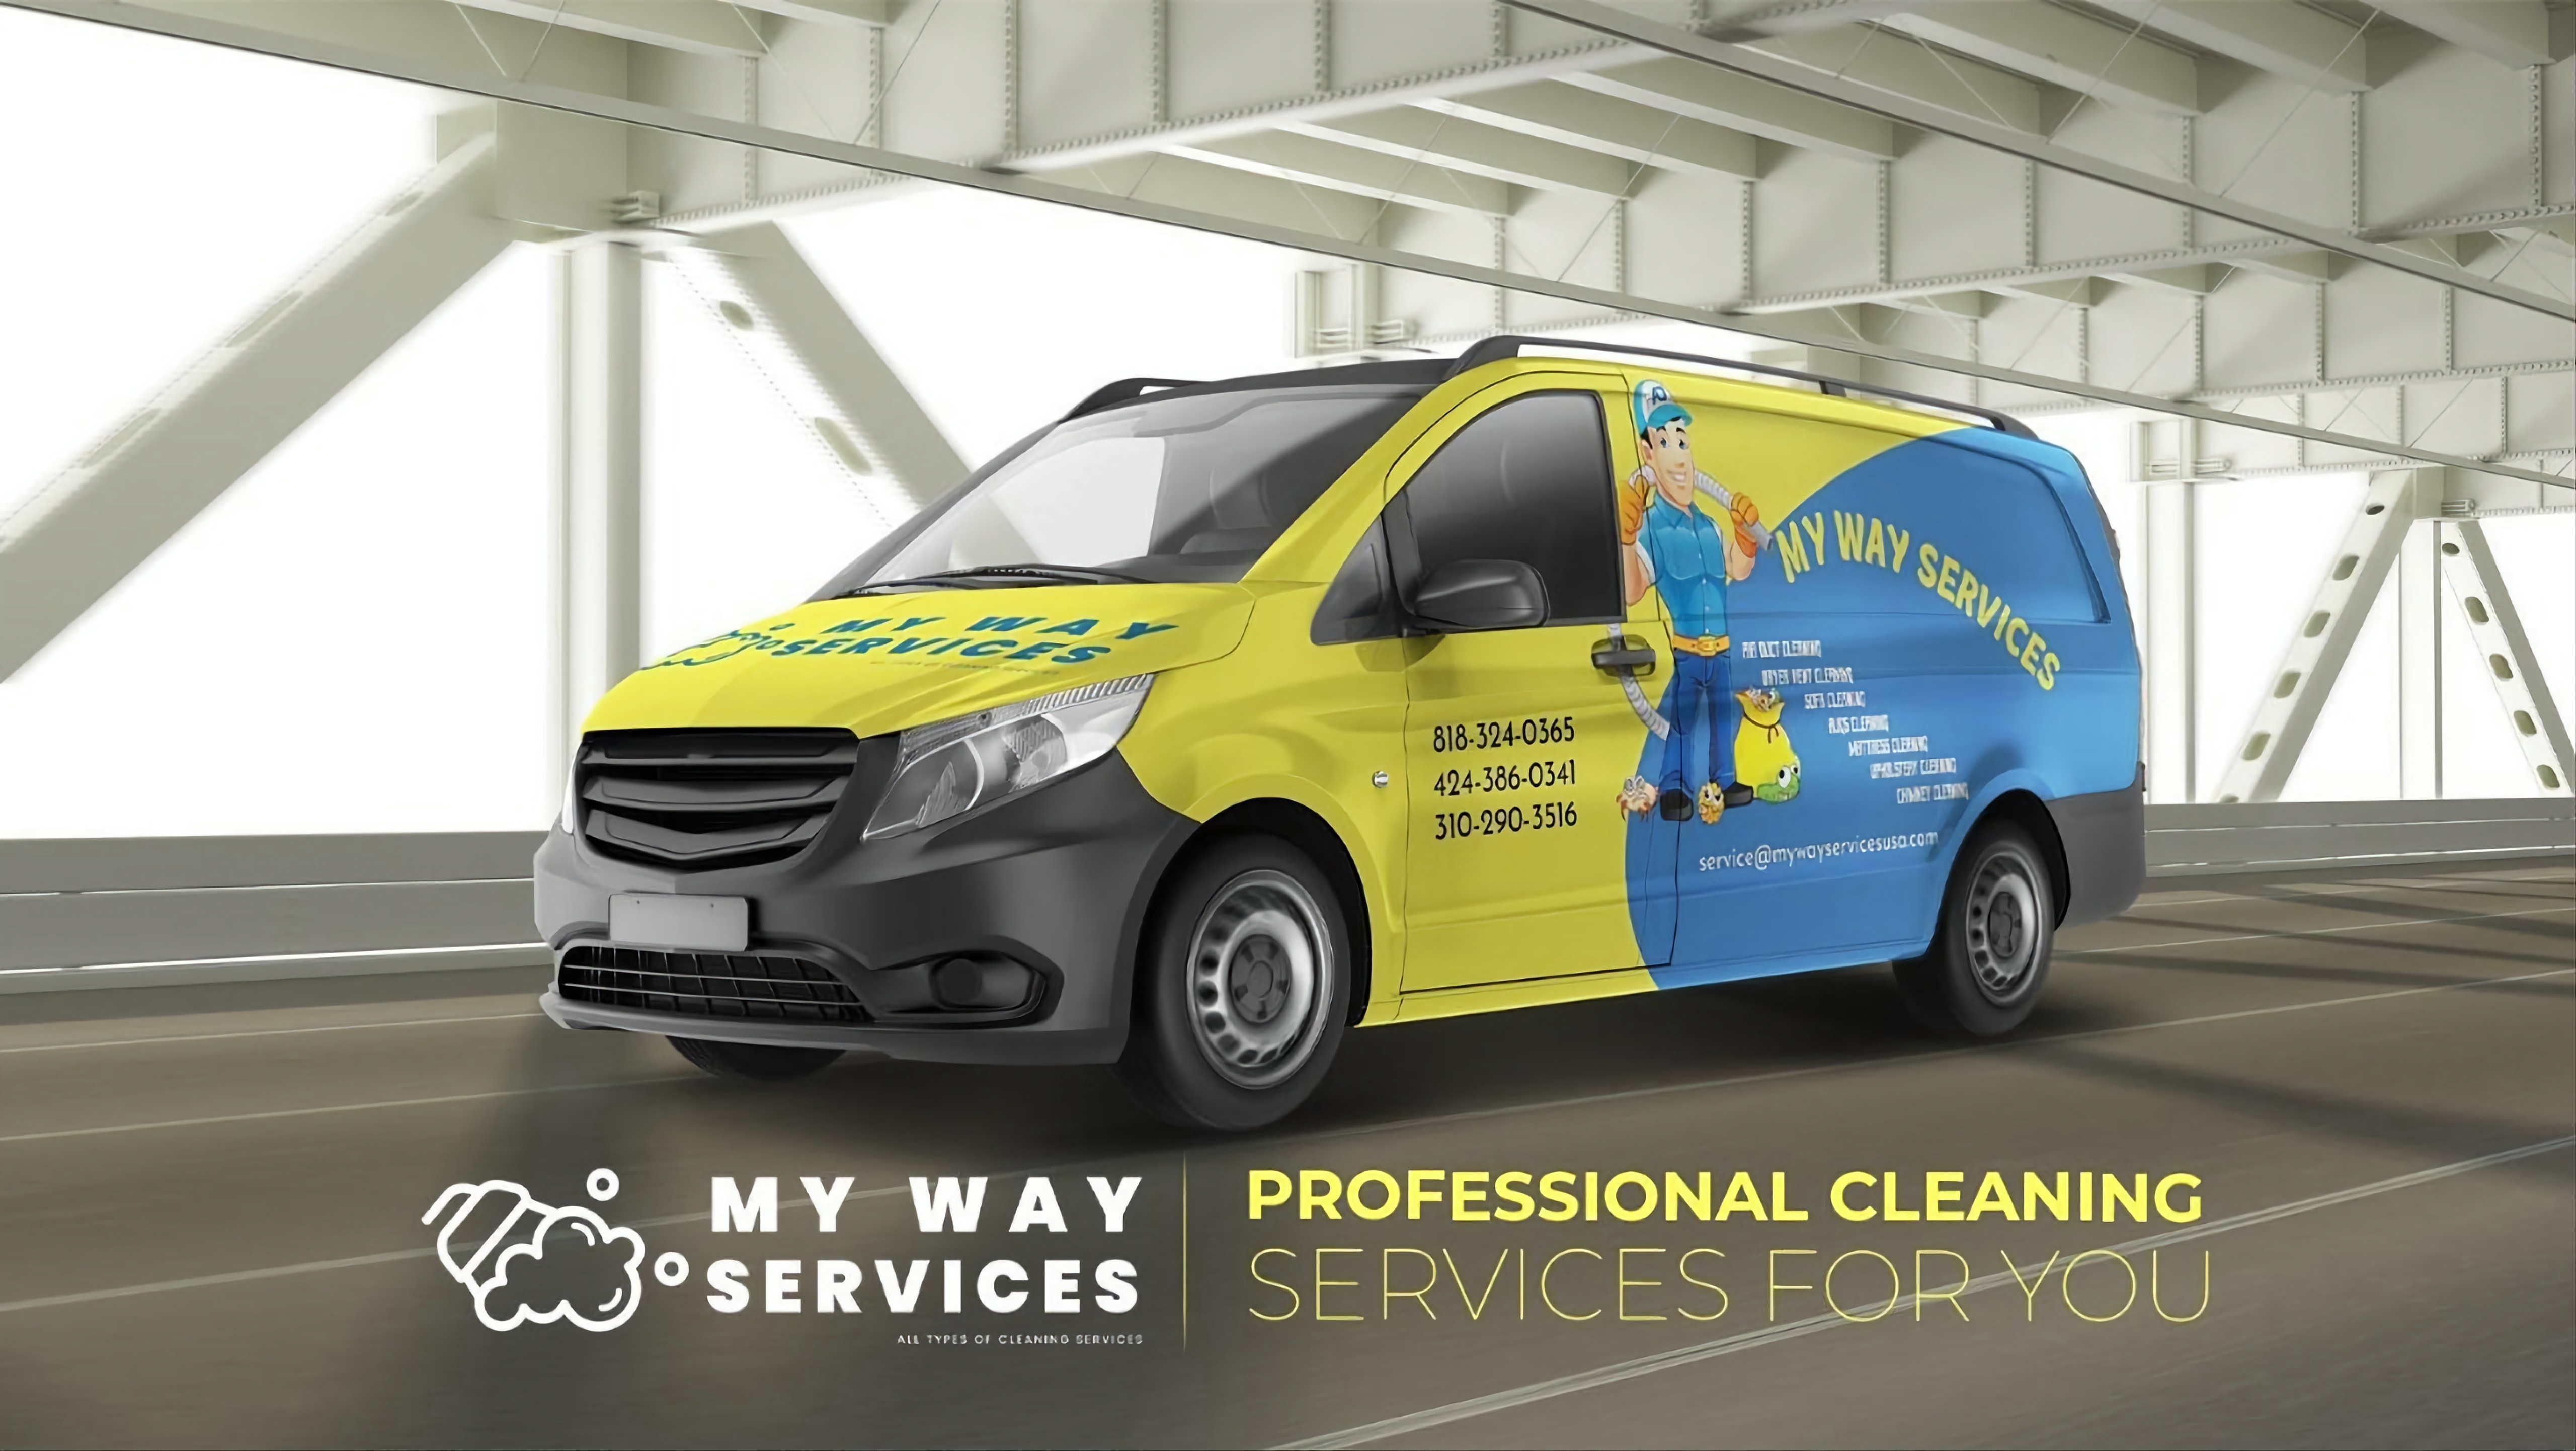 My Way Services - Unlicensed Contractor Logo